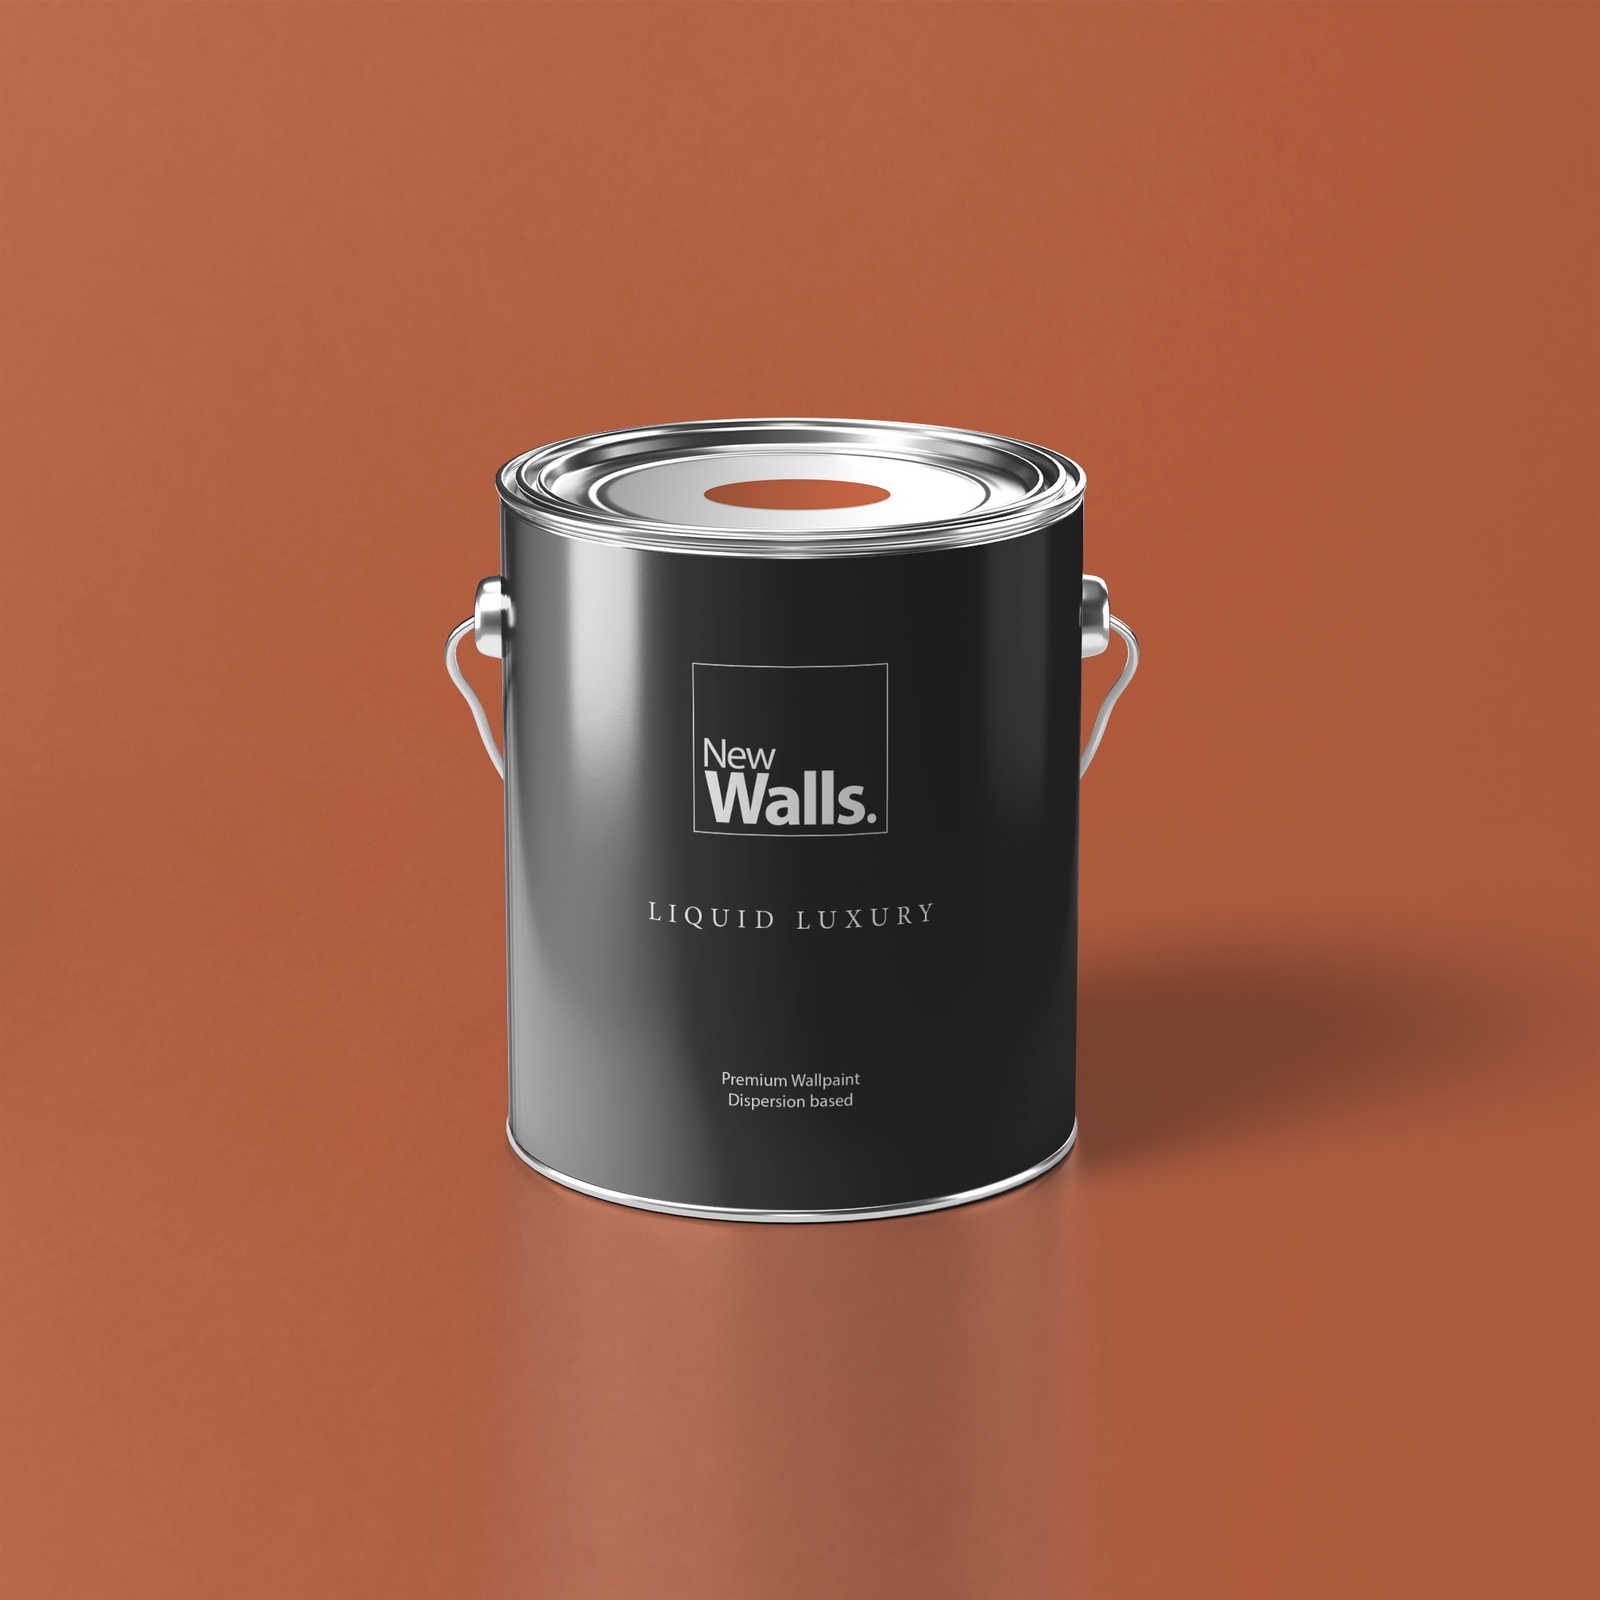 Premium Wall Paint Passionate Blood Orange »Pretty Peach« NW906 – 5 litre
